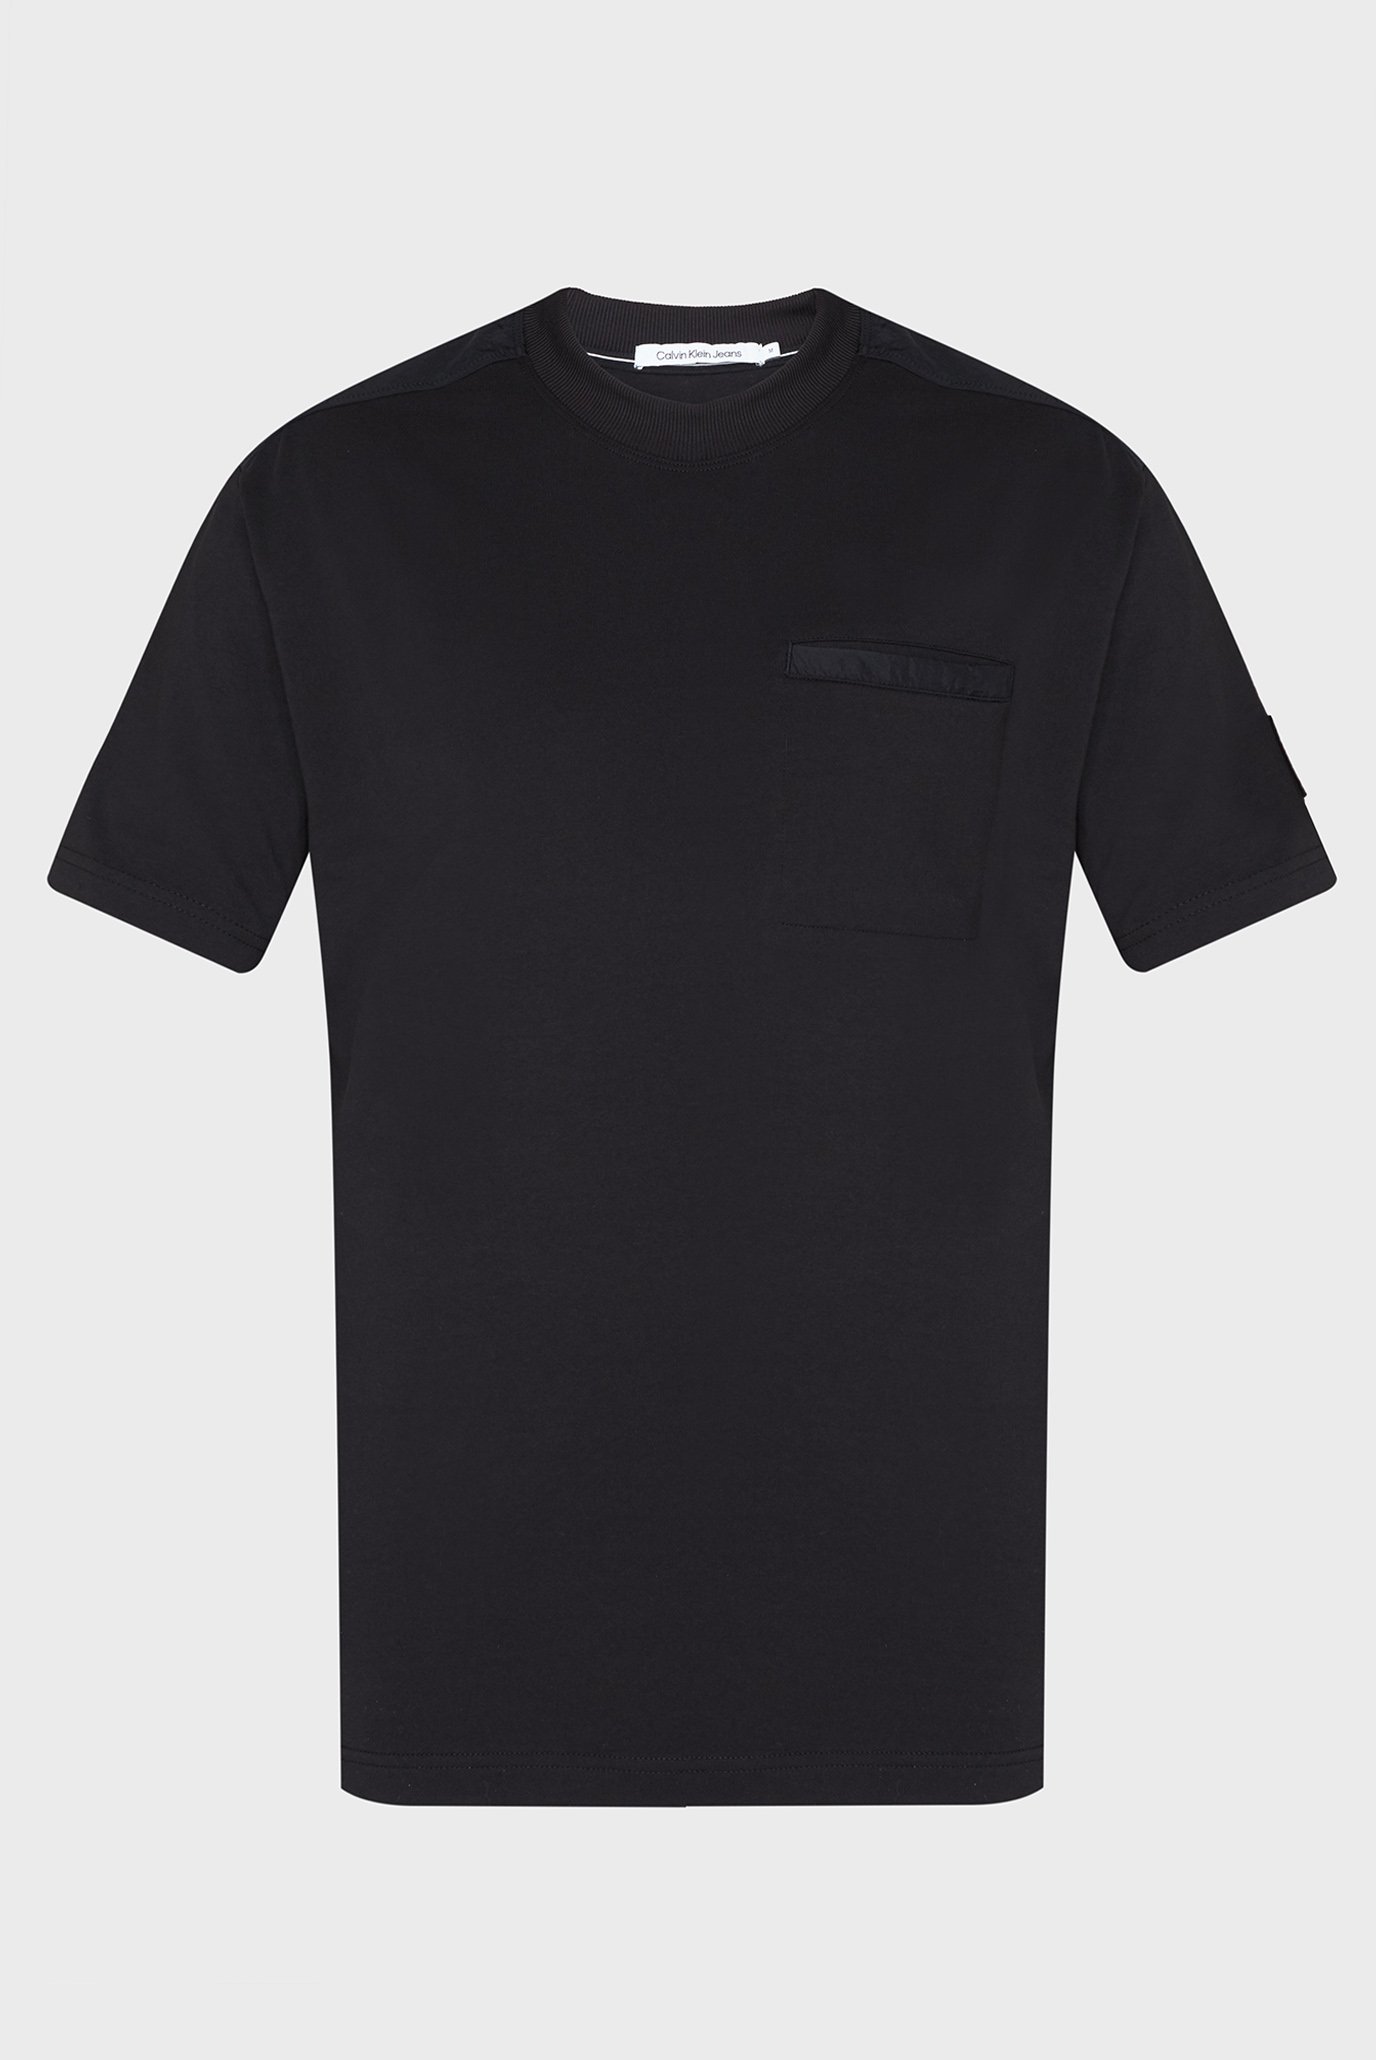 Мужcкая черная футболка MIX MEDIA 1